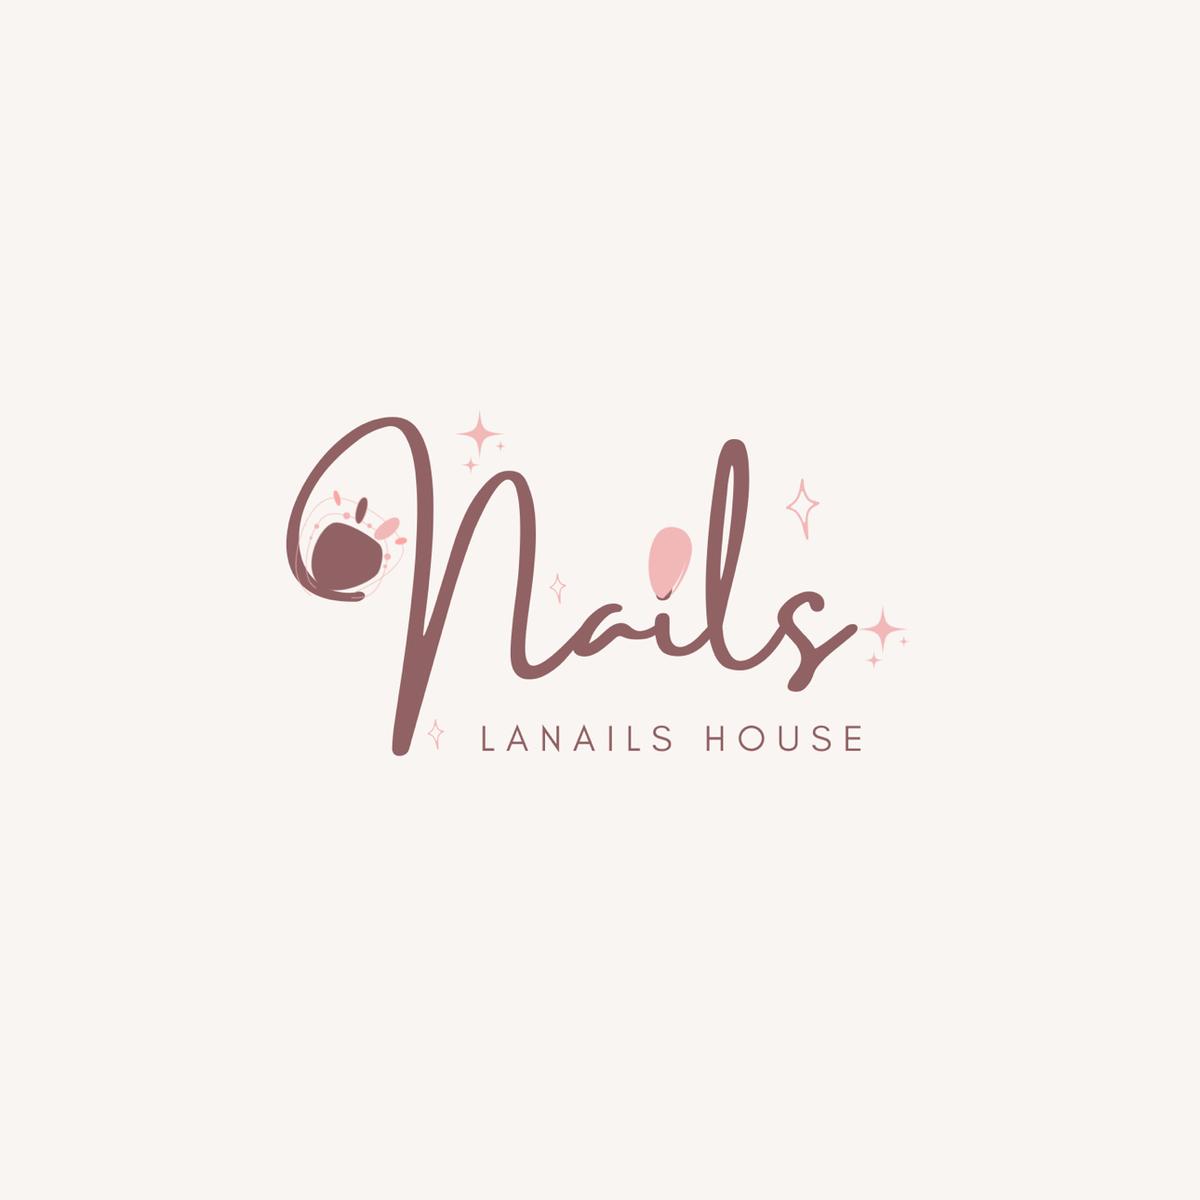 LaNails House